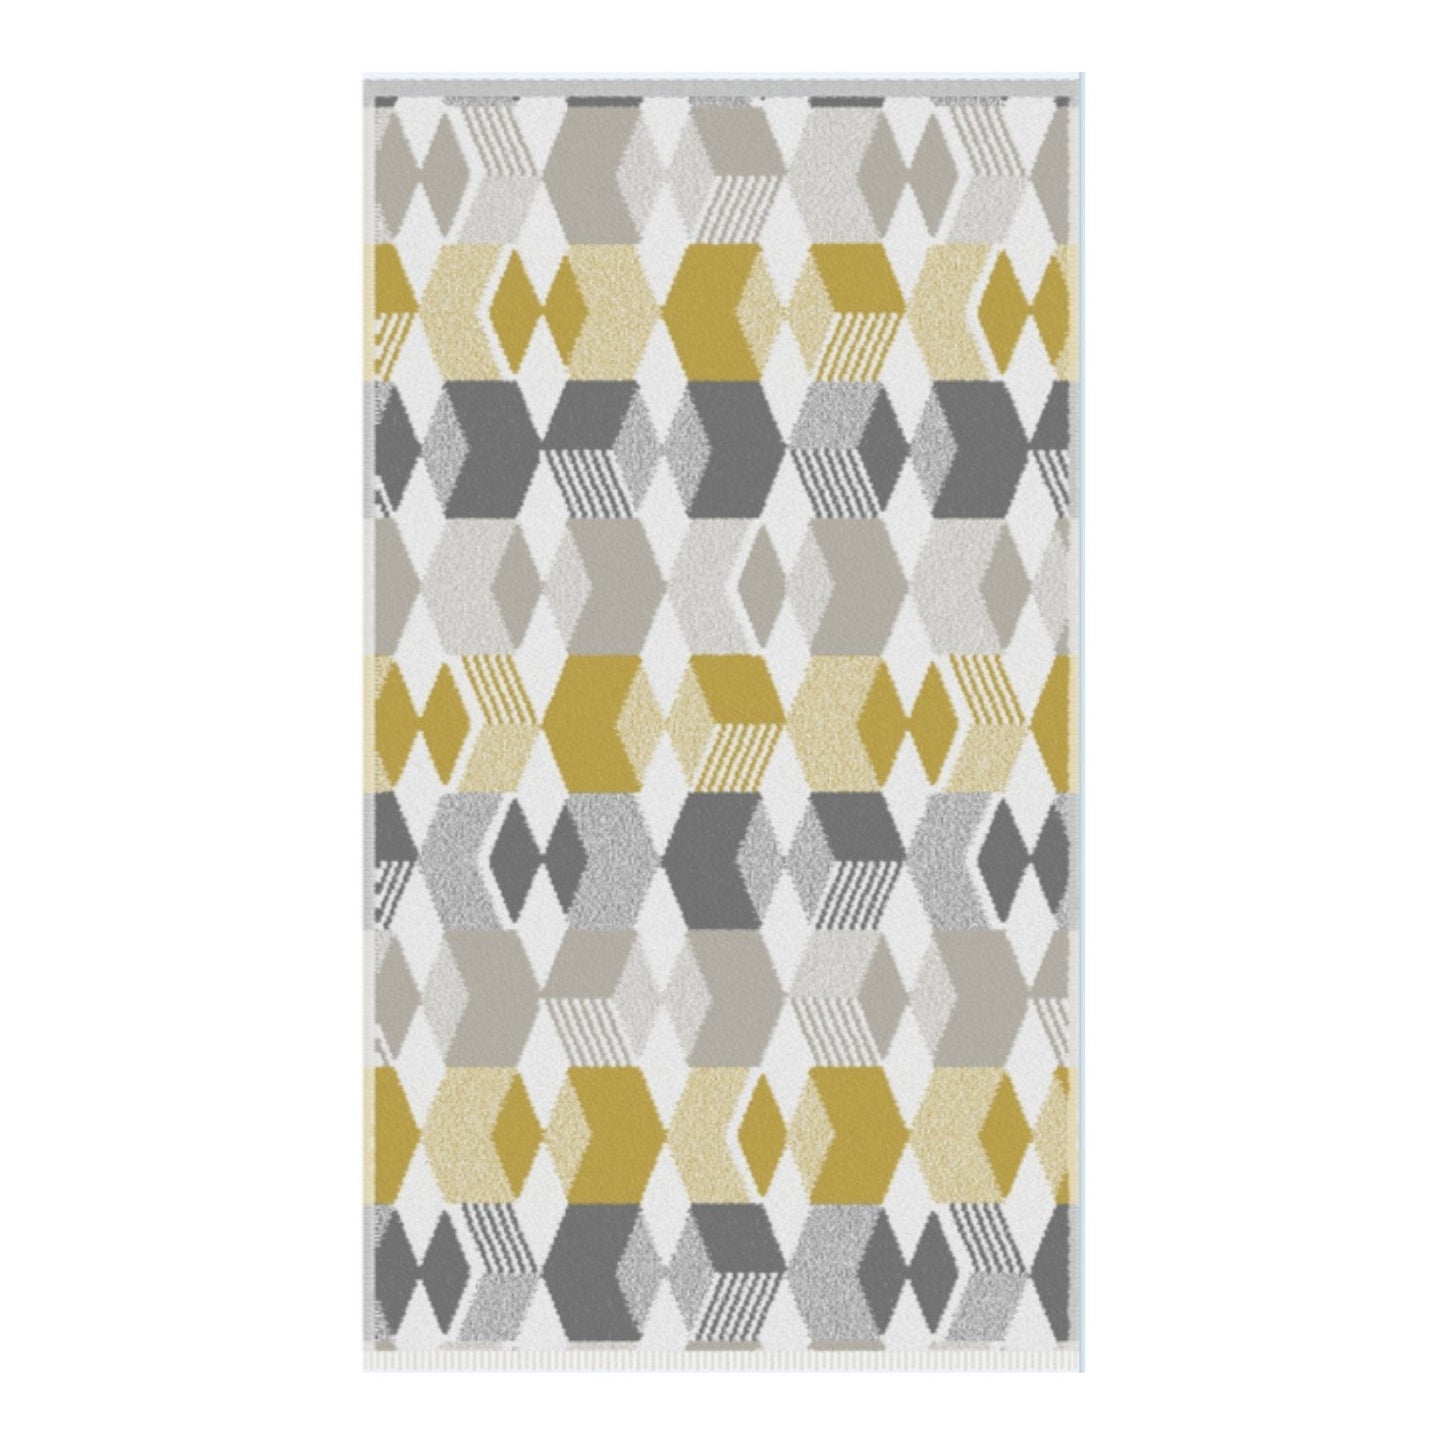 Hexagon Grey/Ochre Geometric 550gsm Cotton Towels